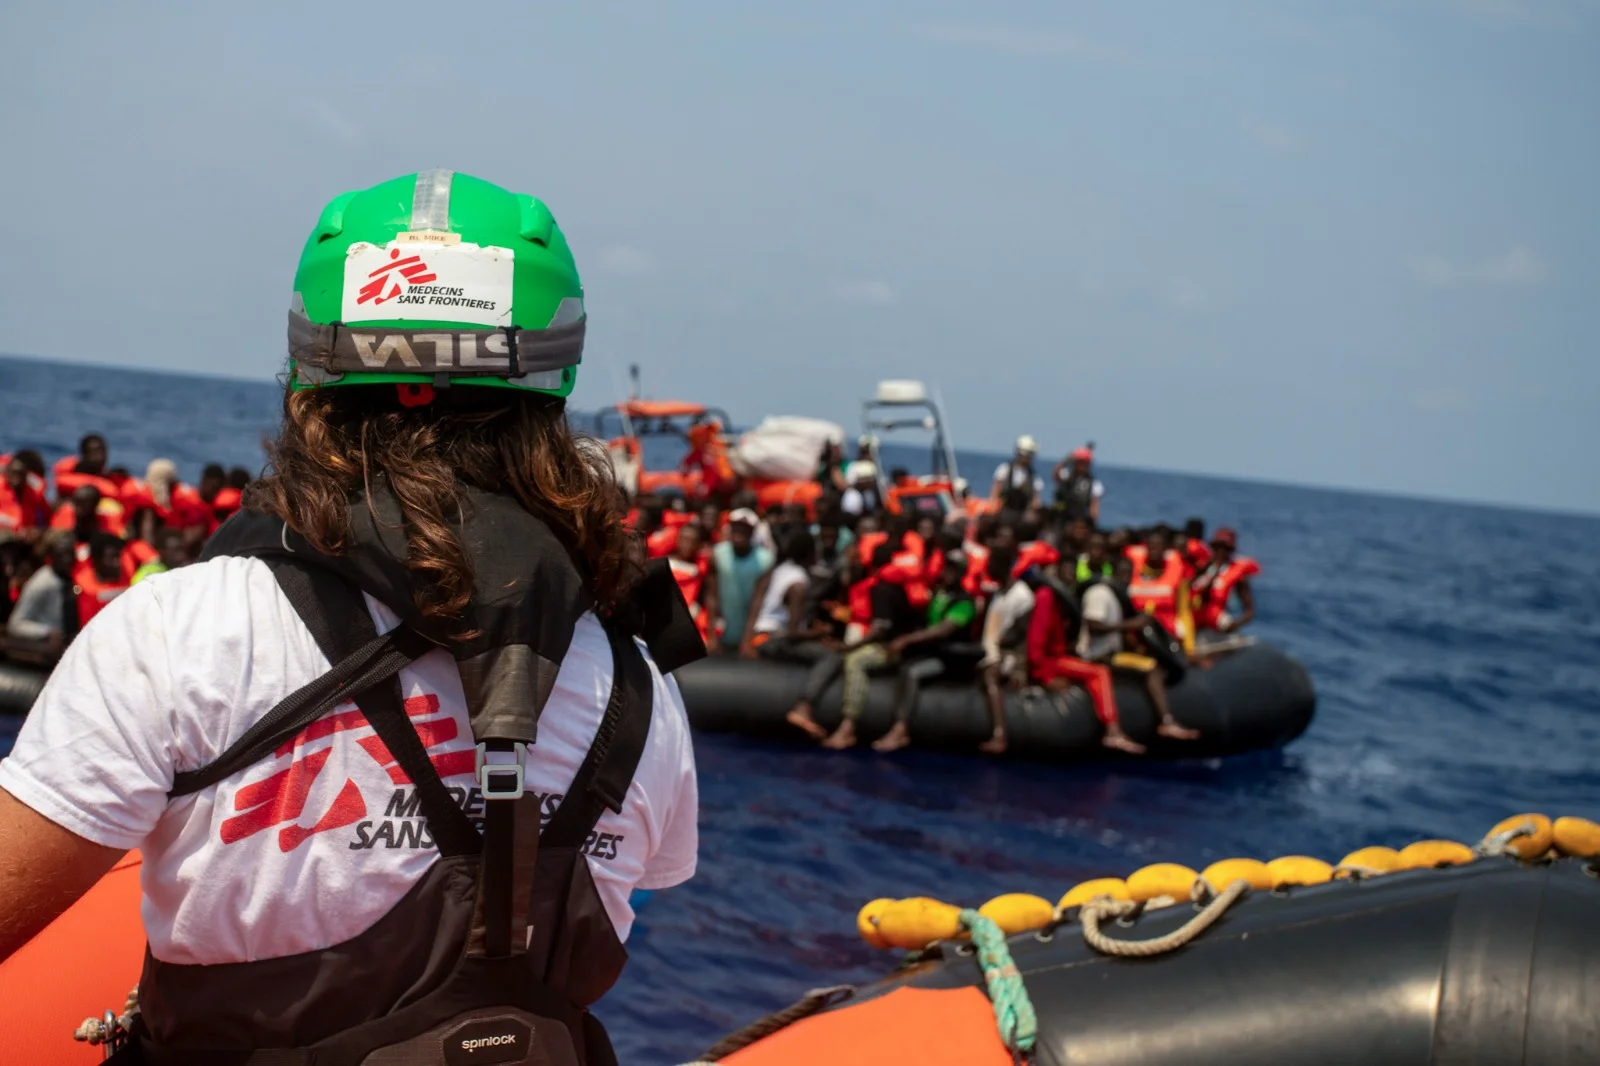 Krystal於去年夏天參與無國界醫生在地中海的搜救任務。